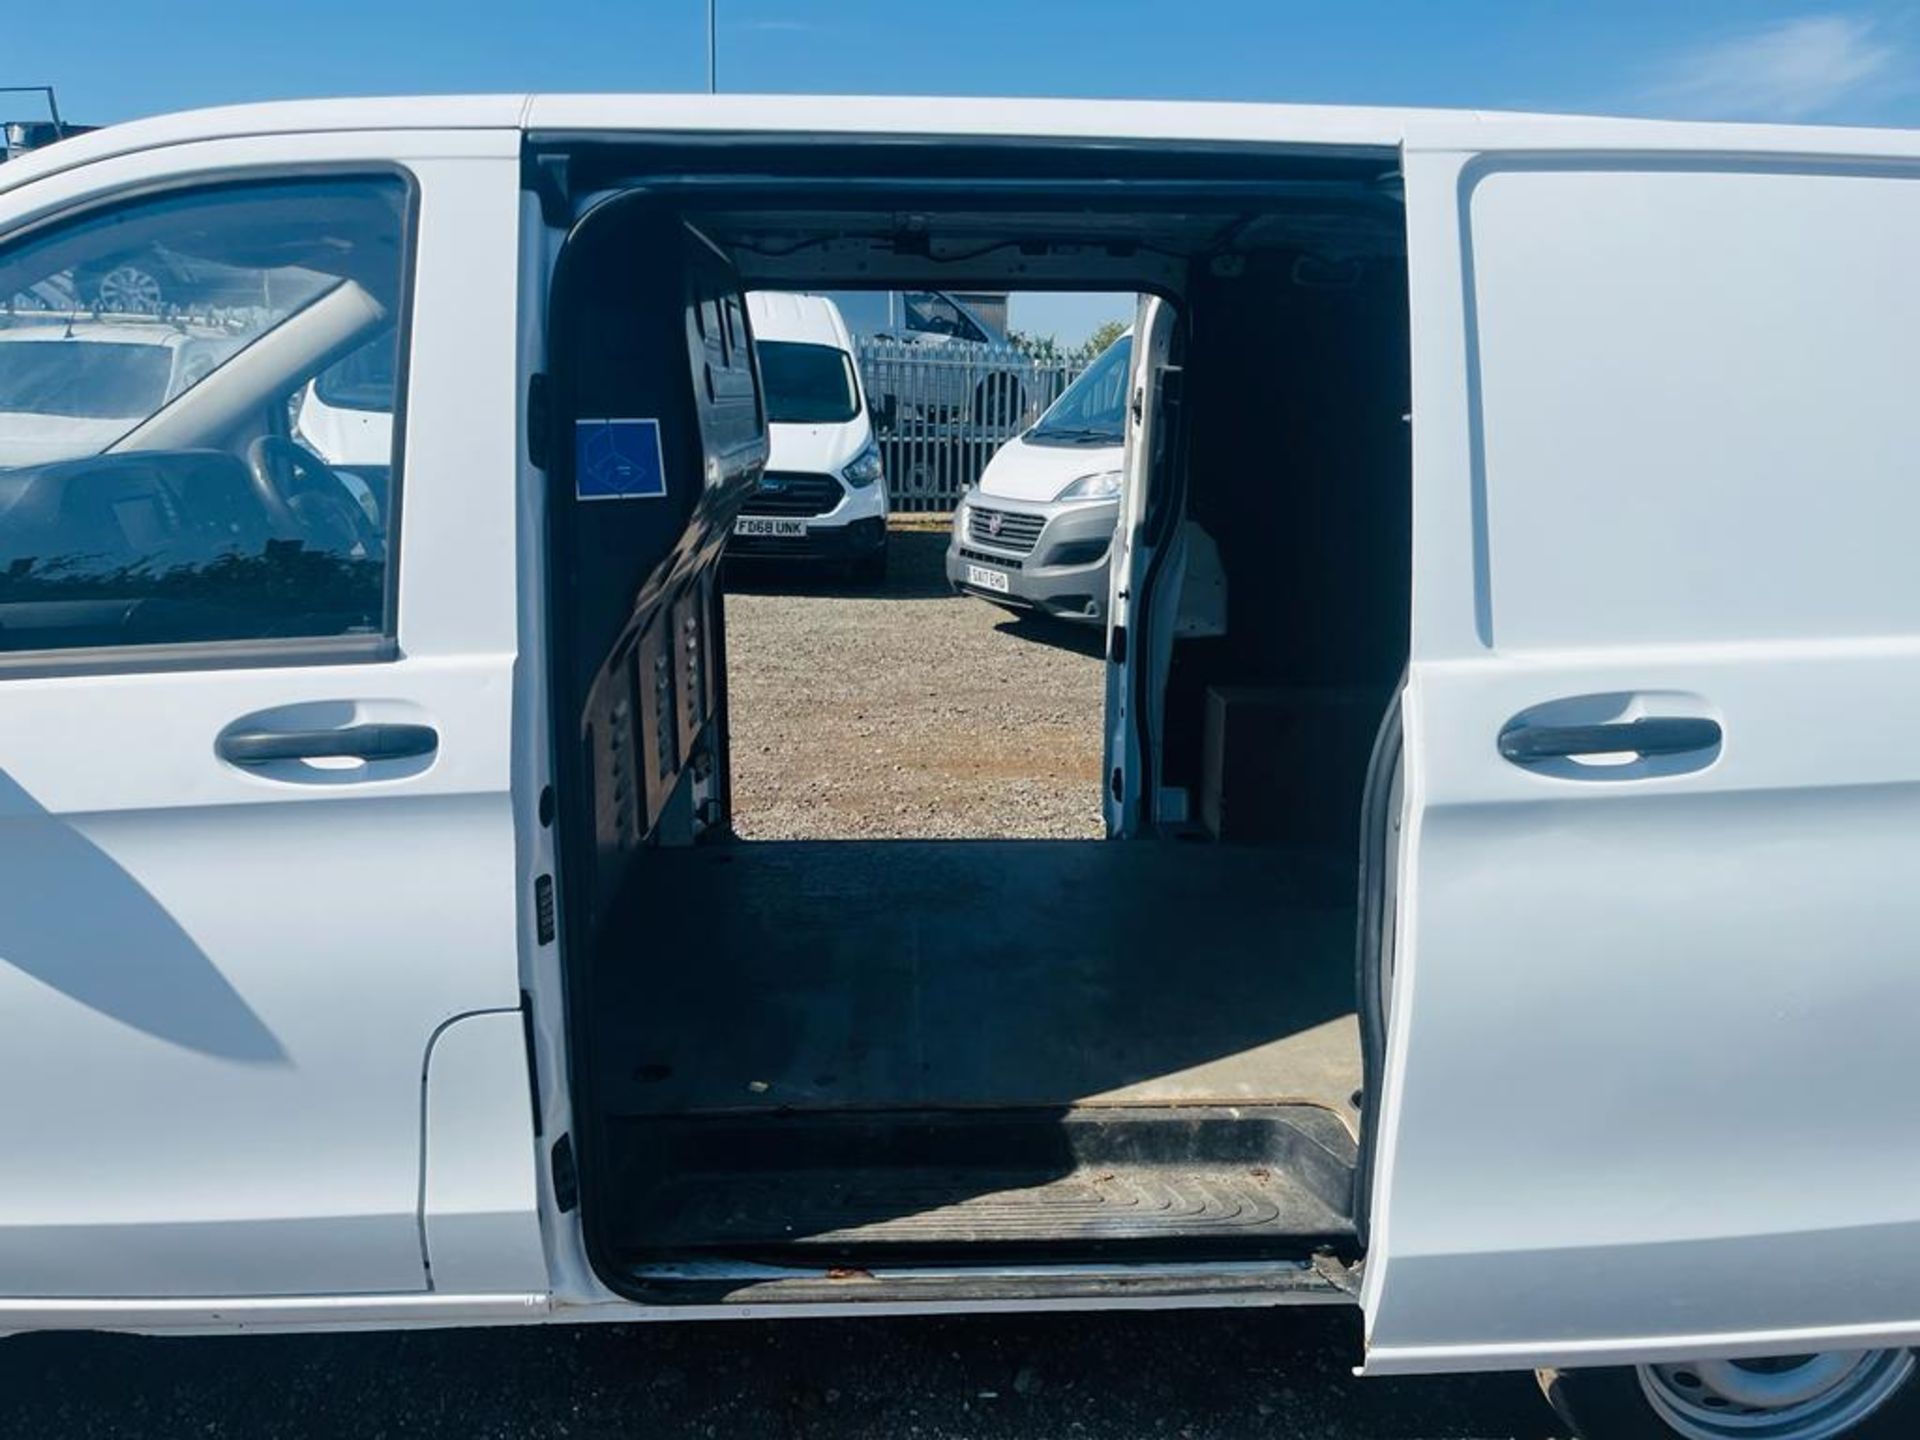 Mercedes Benz Vito 1.6 CDI 111 Long Wheel Base 2015 '65 Reg' Sat Nav - Panel Van - No Vat - Image 6 of 27